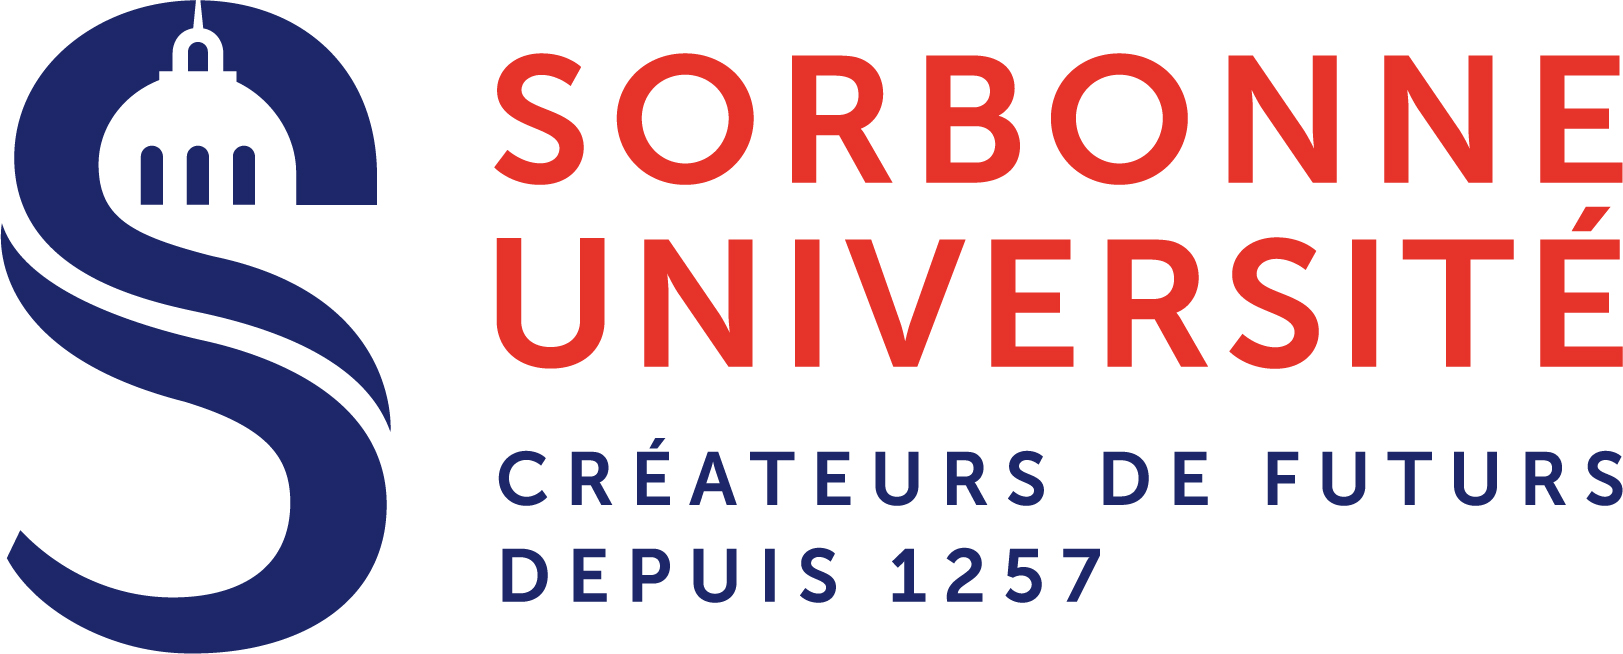 Sorbonne-univ